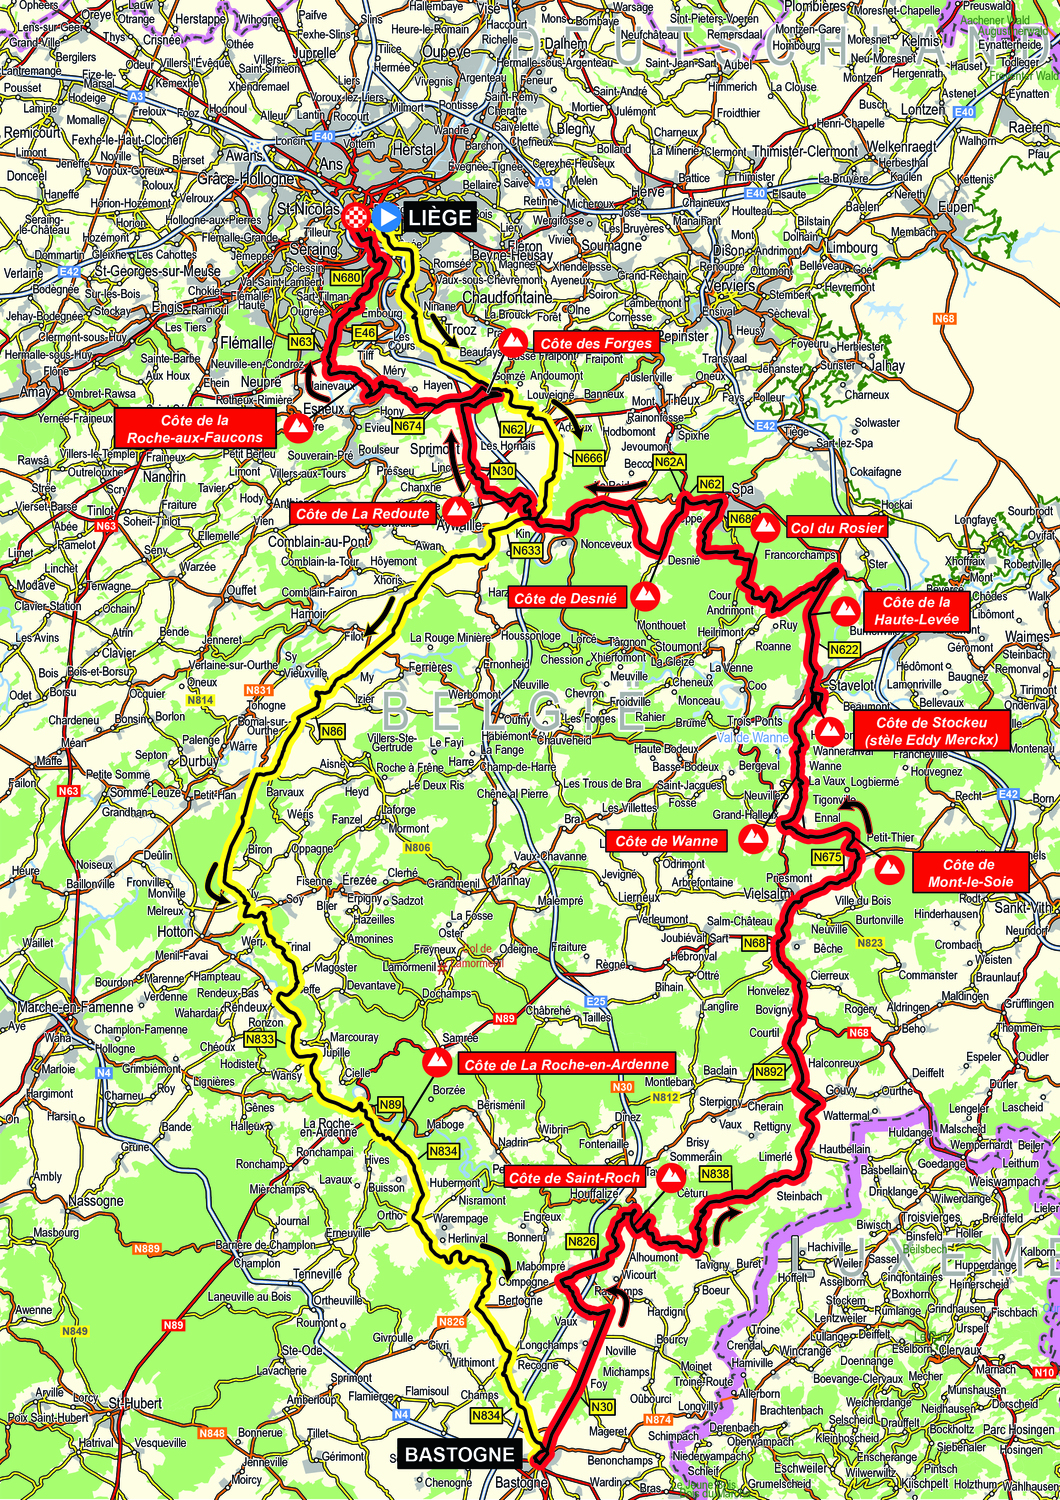 2021 Liège-Bastogne-Liège Live Video, Preview, Startlist, Route, Results, Photos, TV